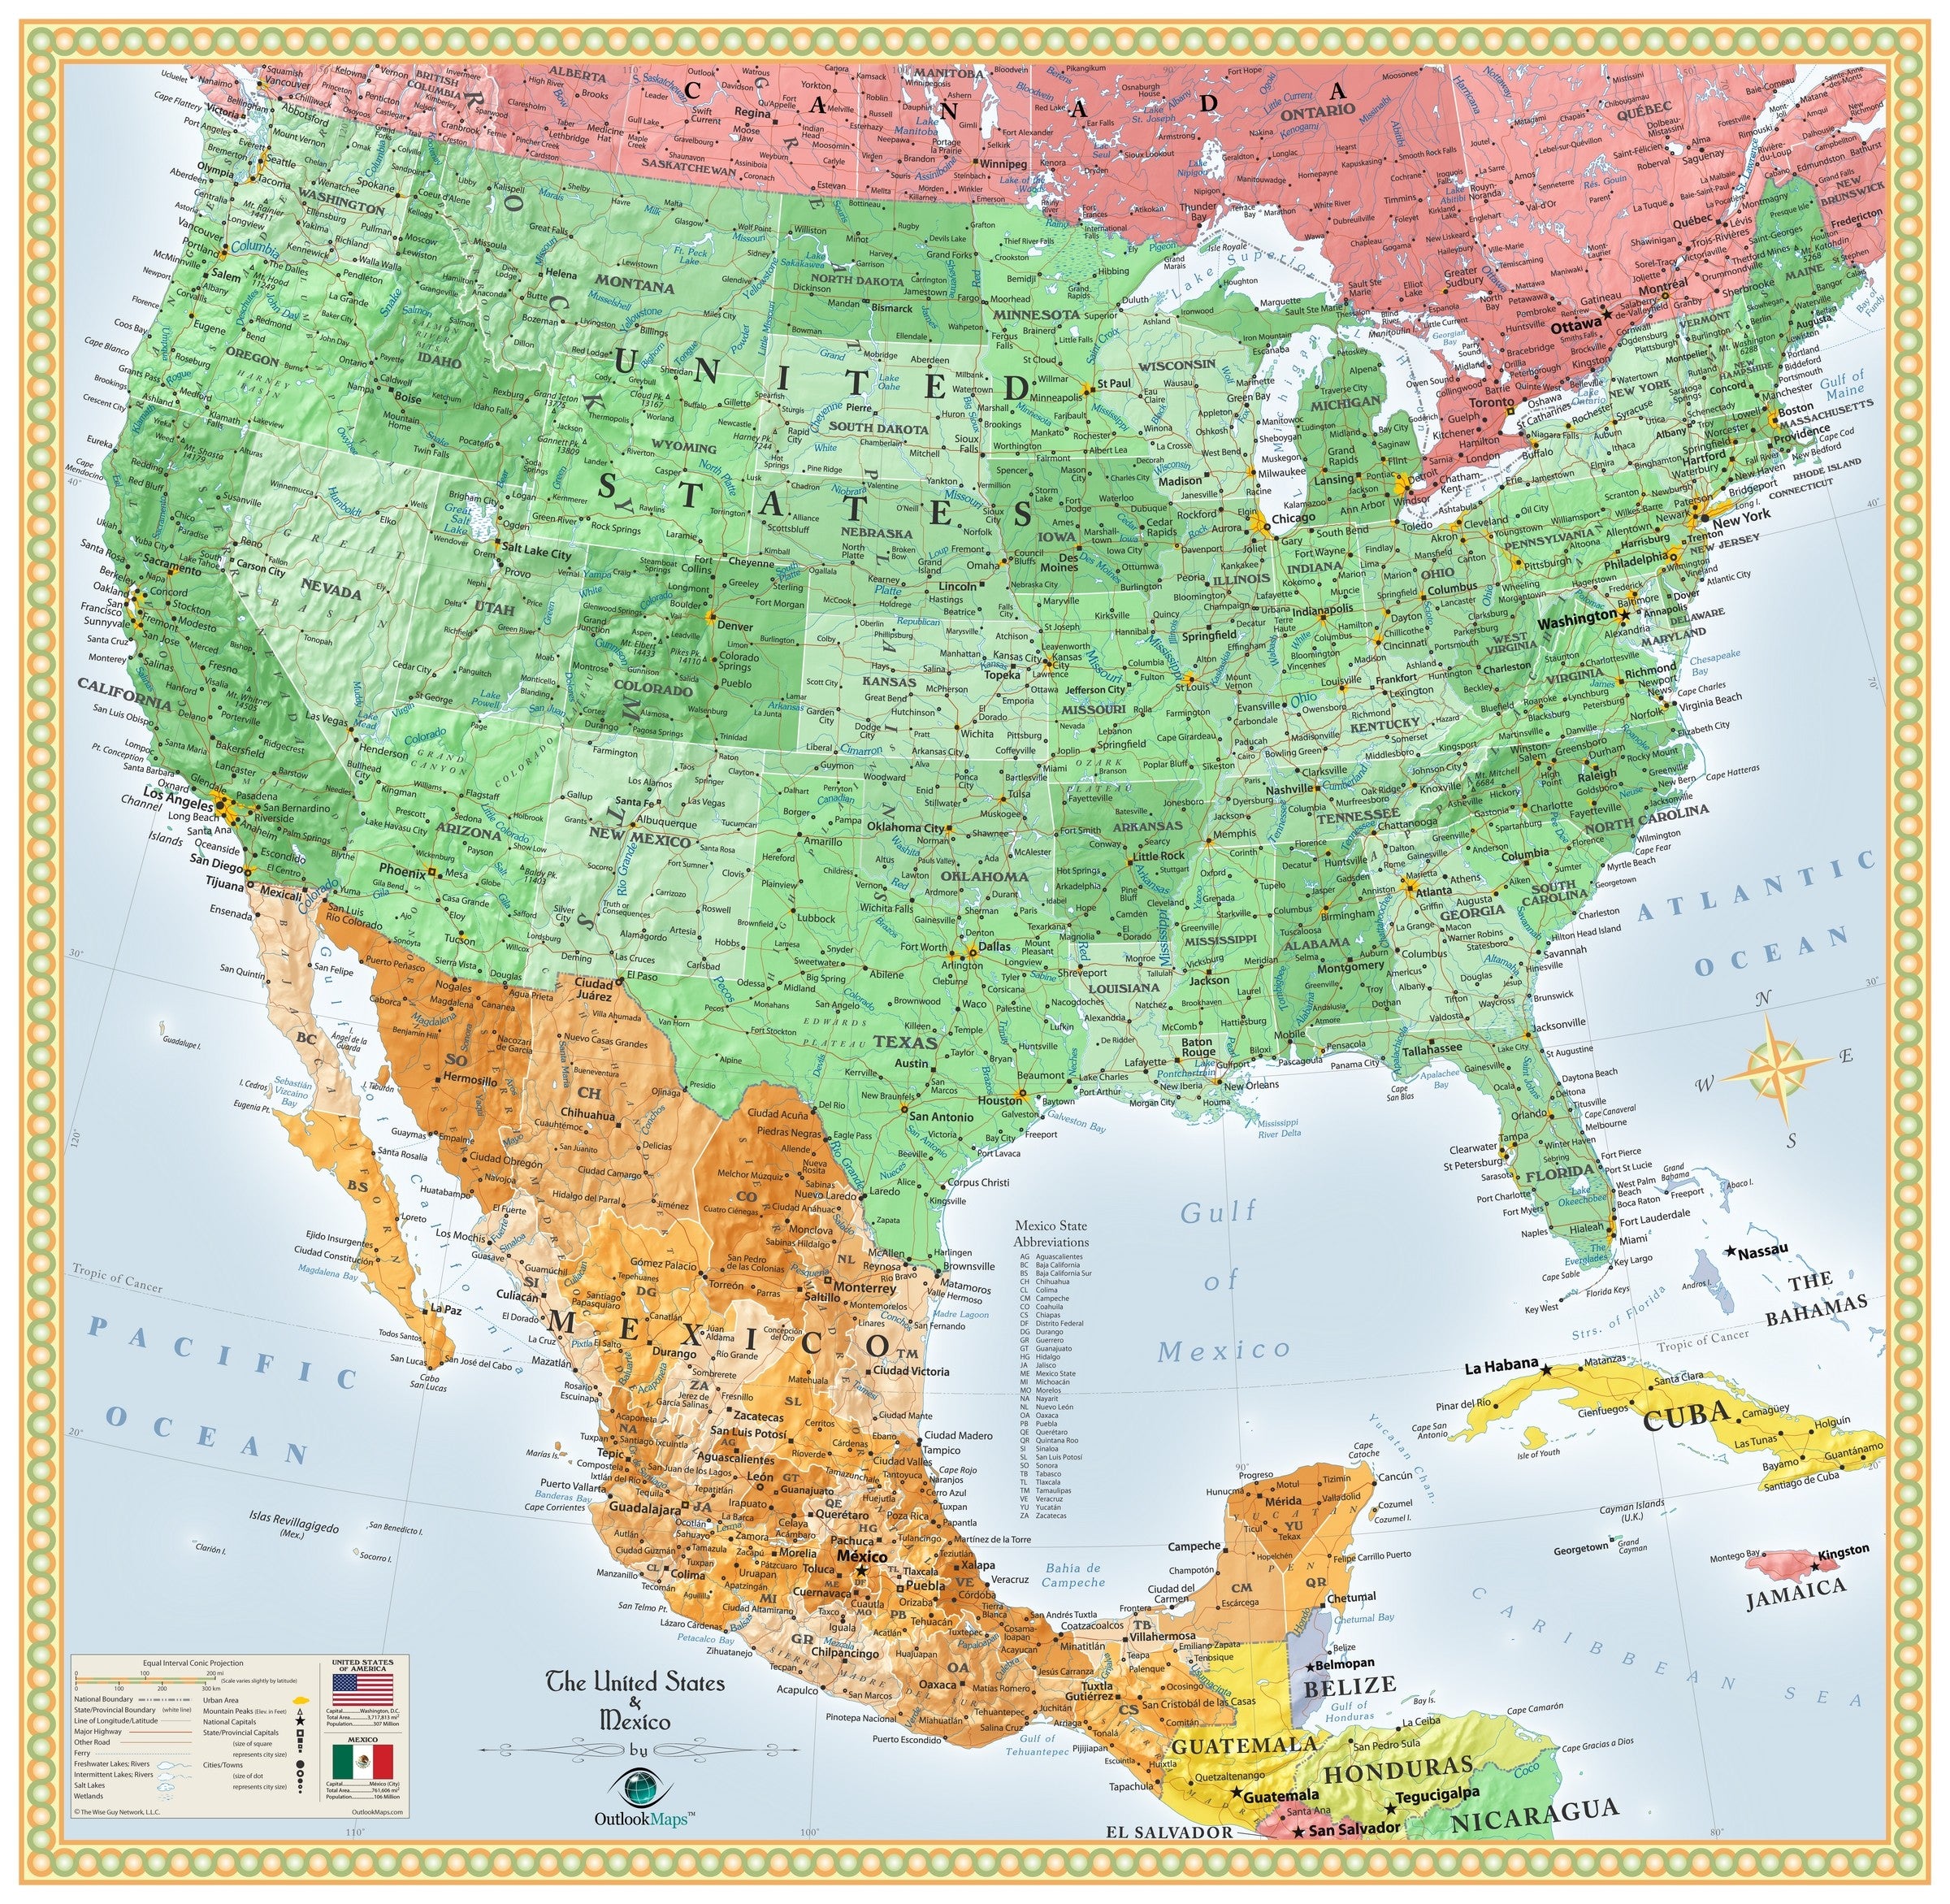 Map Of America And Mexico USA and Mexico Wall Map | Maps.com.com